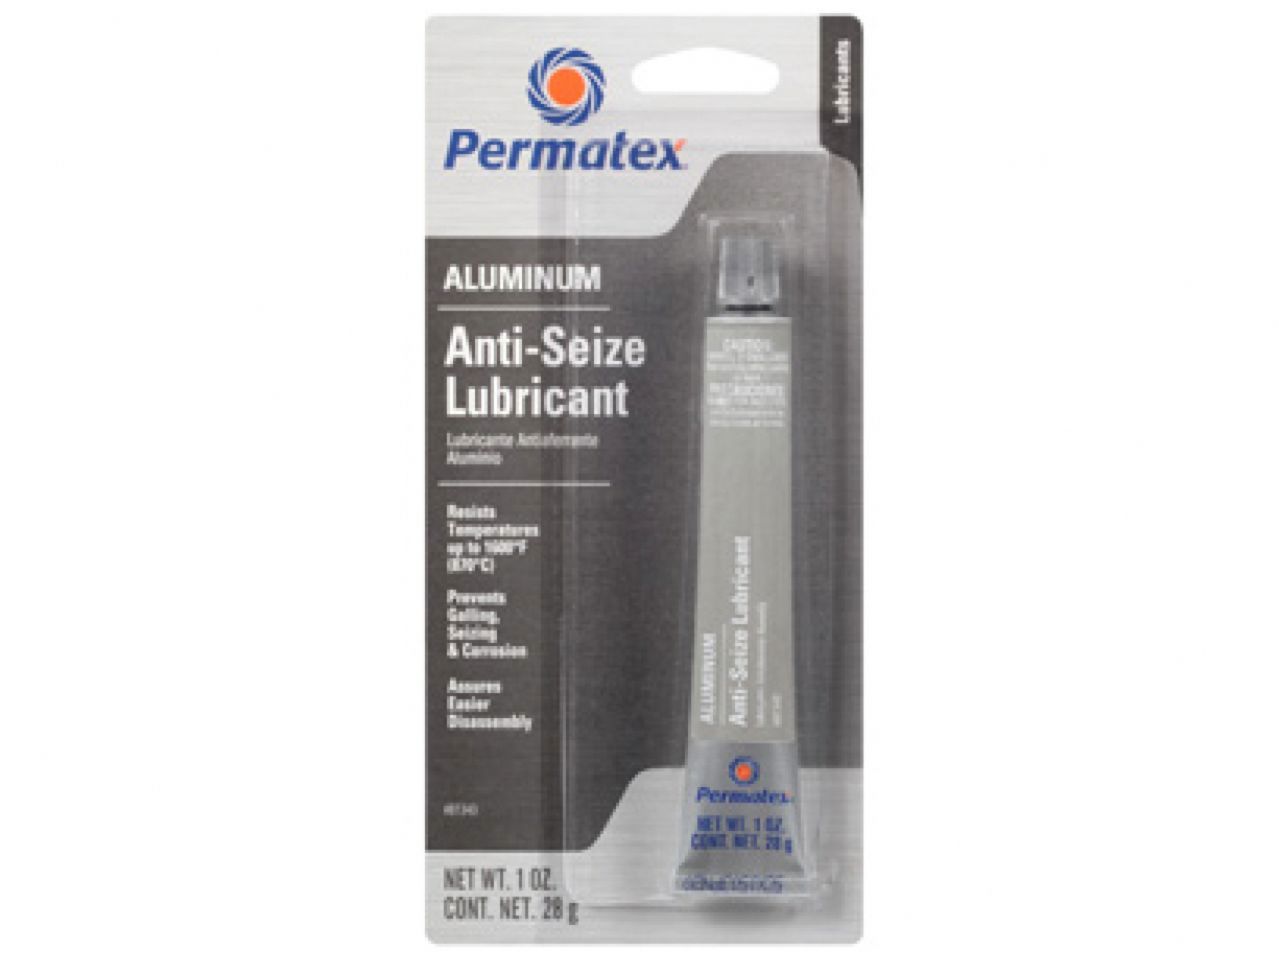 Permatex Anti-Seize Lubricant, 8 oz brush top bottle, Each